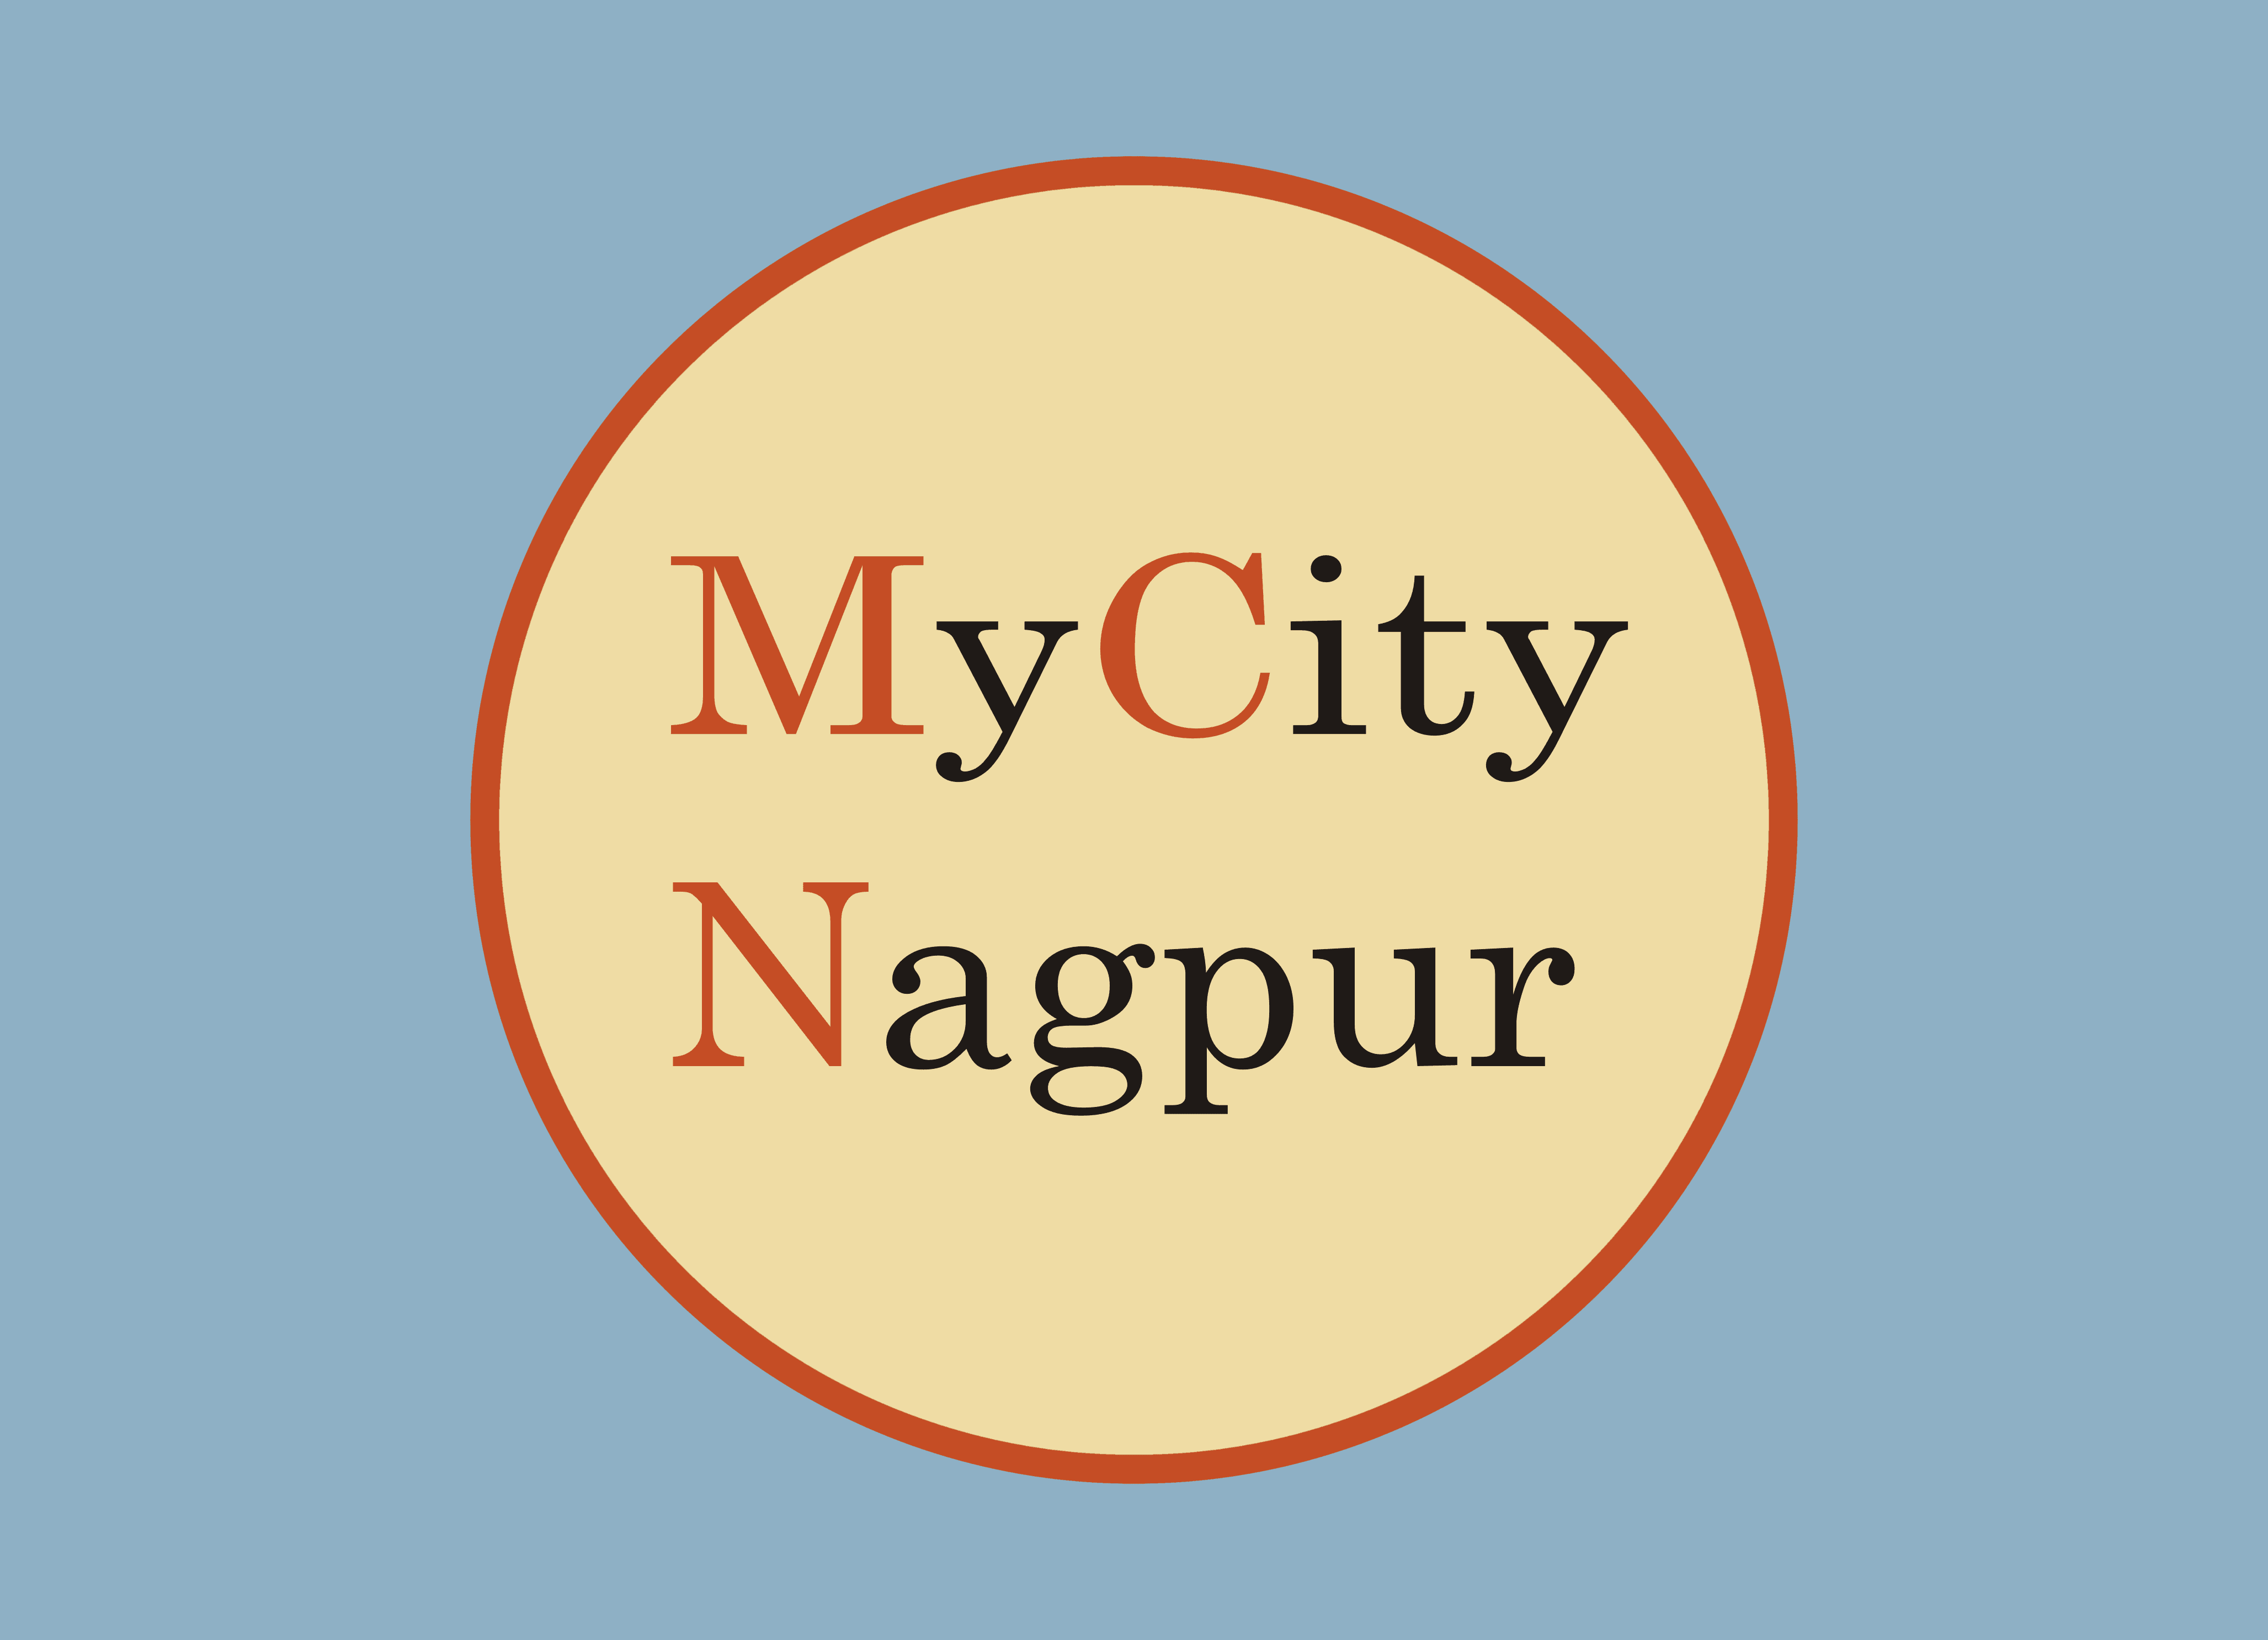 MyCityNagpur